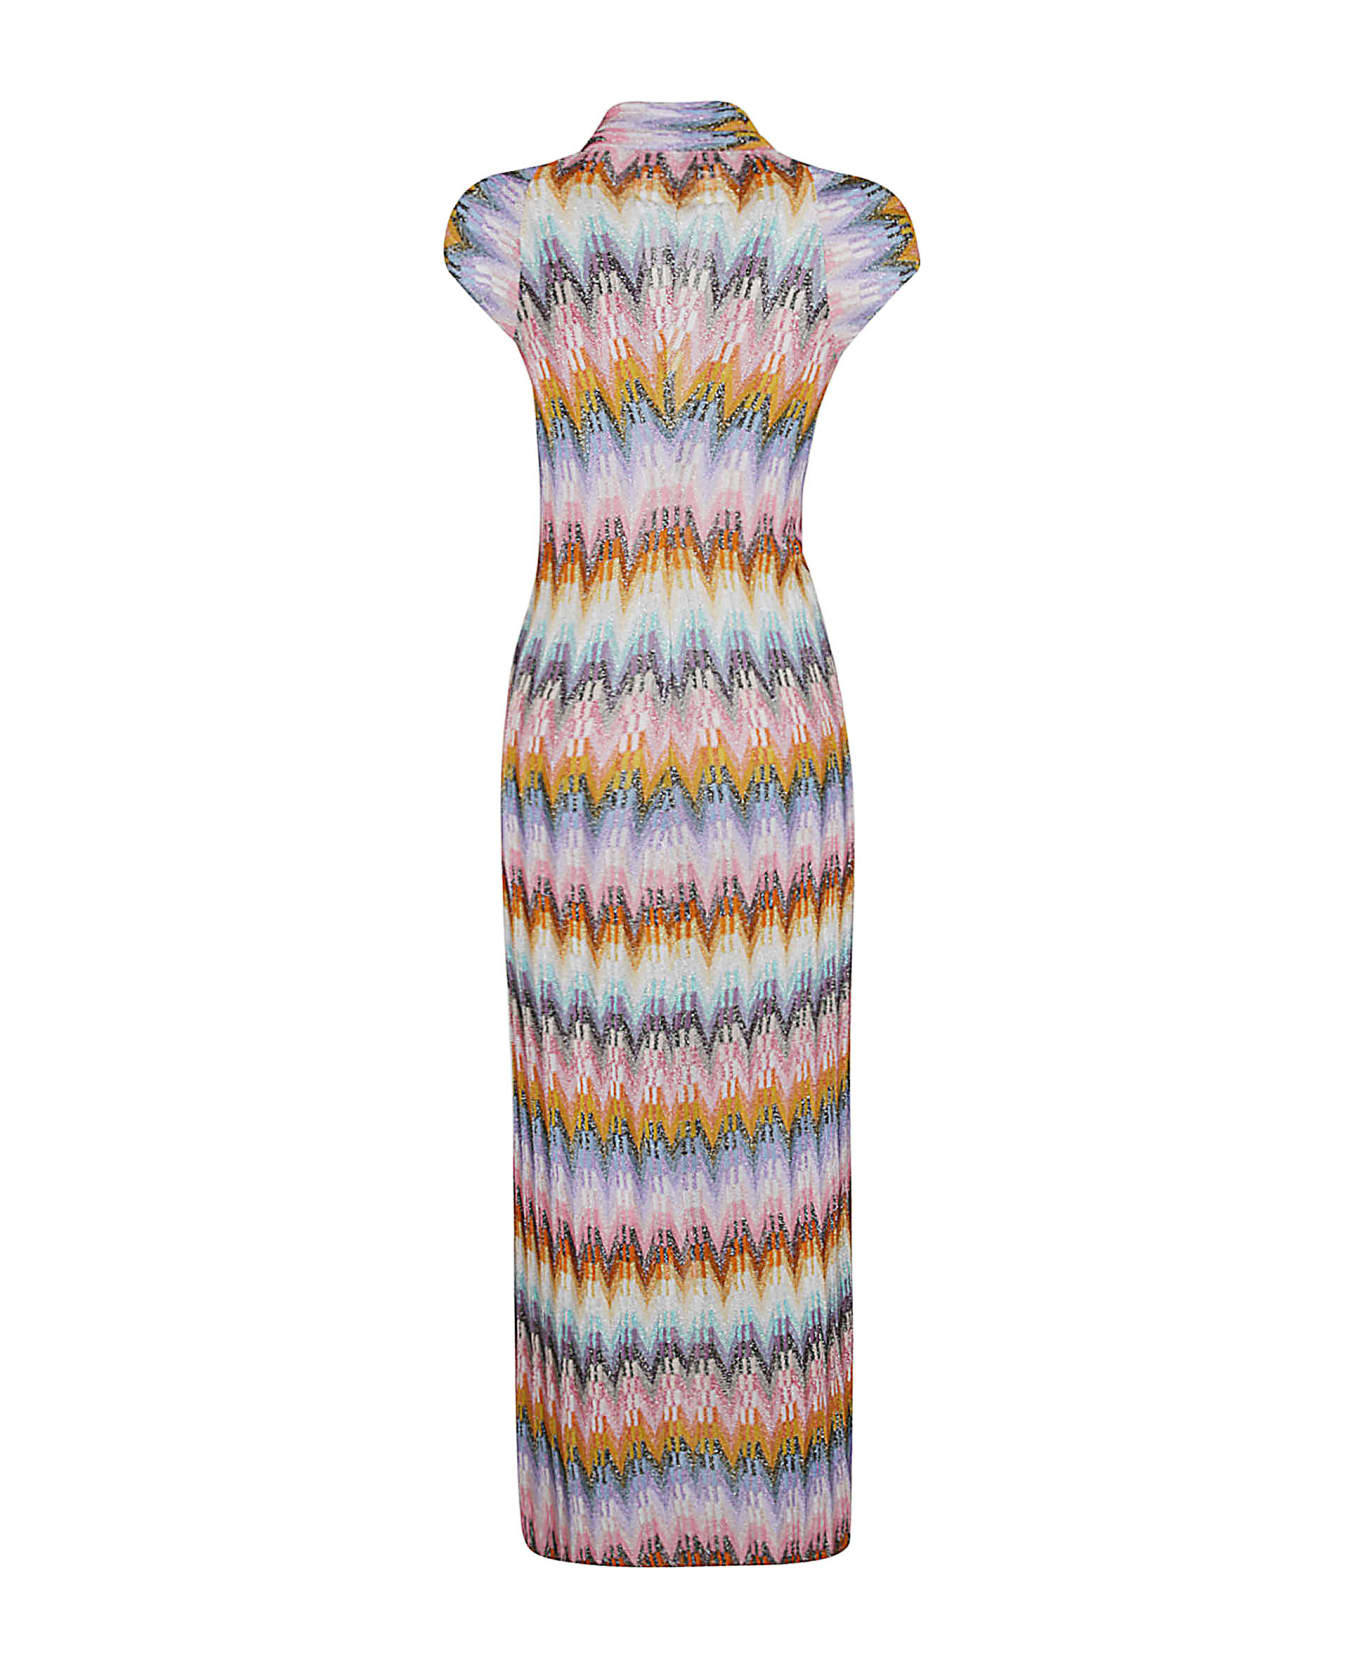 Missoni Wrap Front Asymmetric Zig-zag Patterned Sleeveless Dress - multi yell/grt/blu/ ジャンプスーツ